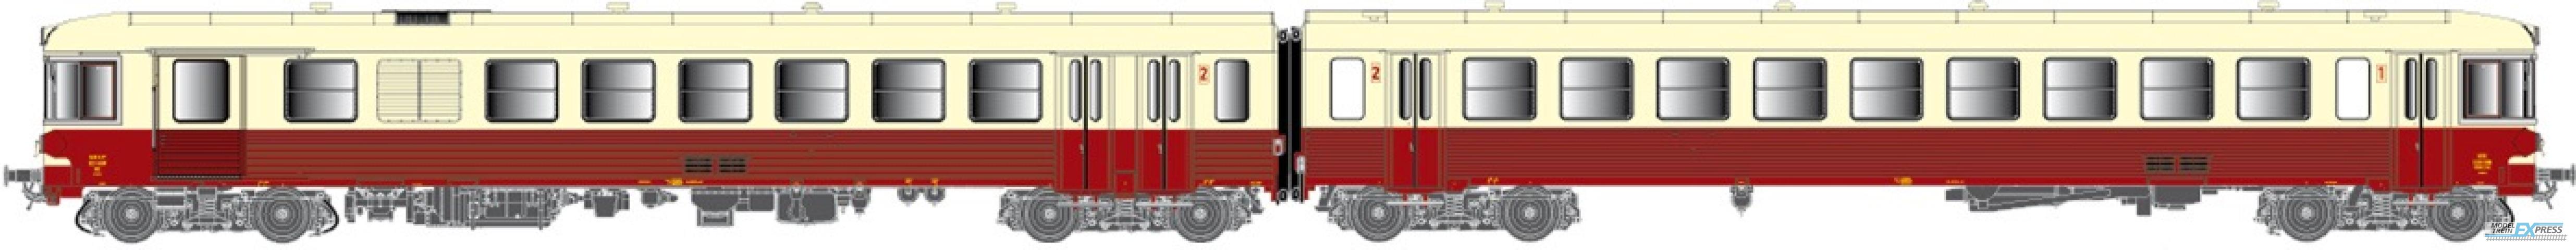 LS Models 10060 X 4300 + XR 8300, rood/crème, crème dak, panorama ramen, oorsprong  /  Ep. IIIB  /  SNCF  /  HO  /  DC  /  1 P.